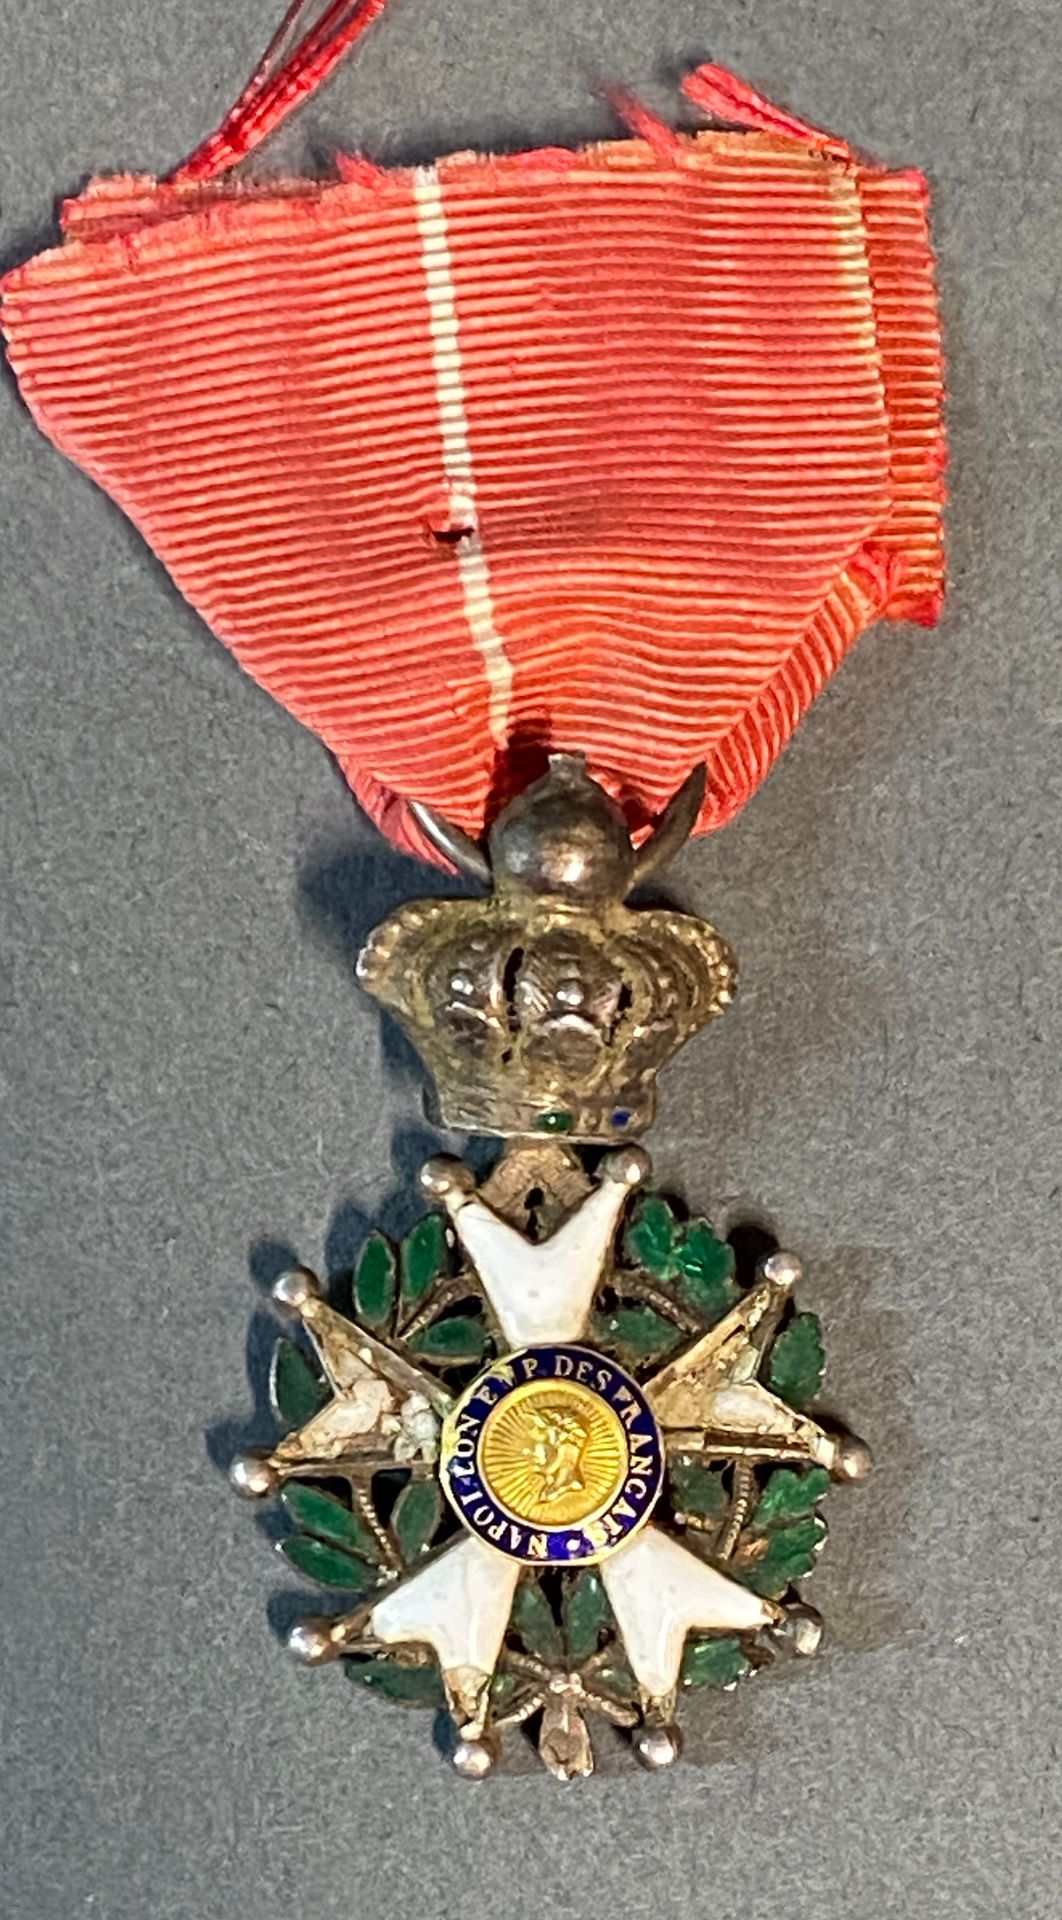 Null 
1802年设立的荣誉军团




骑士级别的半尺寸银质奖章。 




第四种类型。




事故。

毛重 : 3,3 g